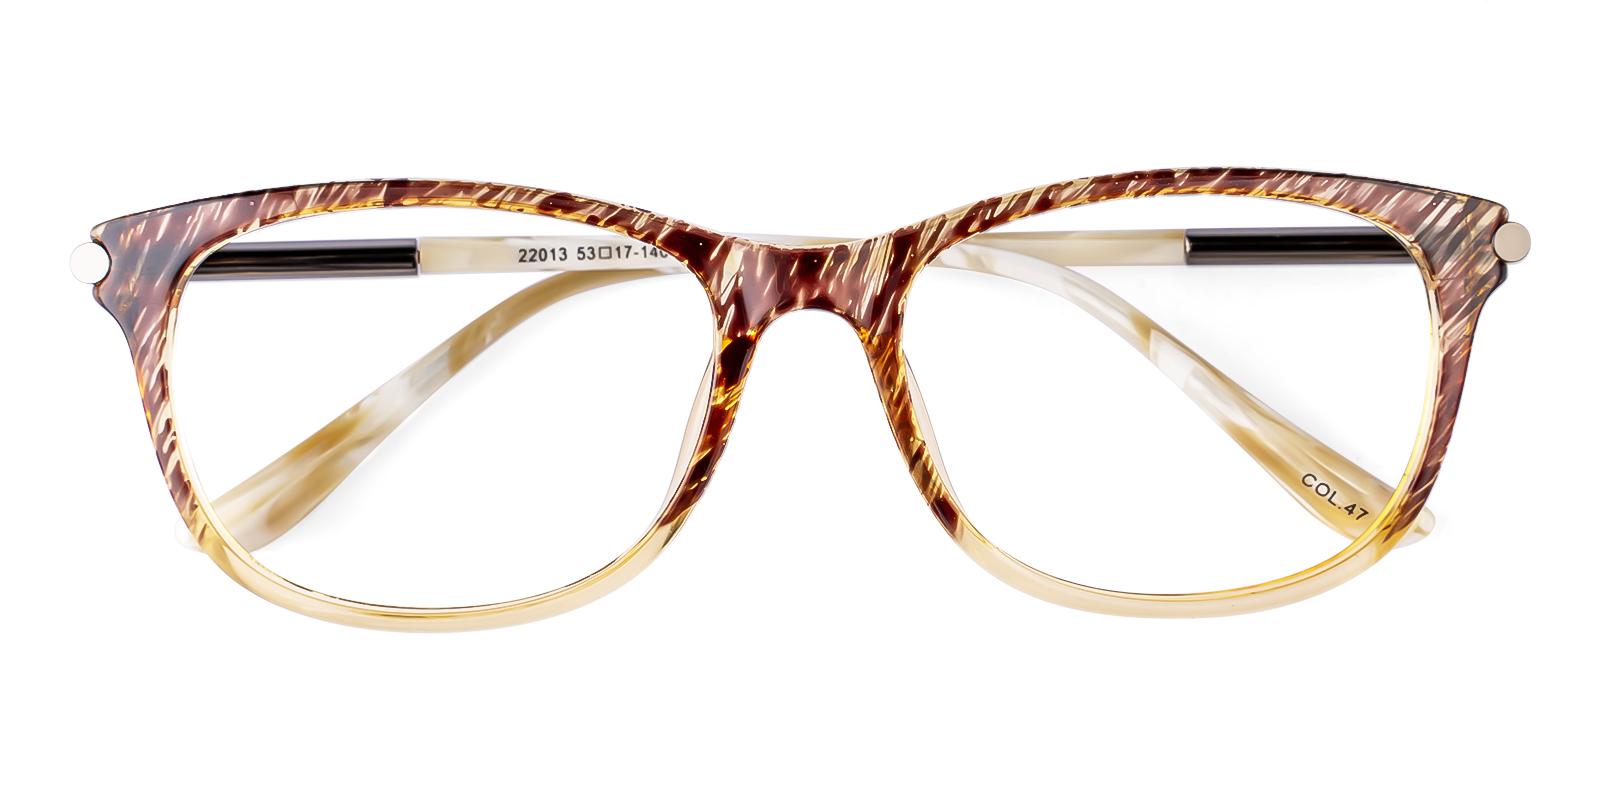 Amphible Striped Acetate Eyeglasses , SpringHinges , UniversalBridgeFit Frames from ABBE Glasses